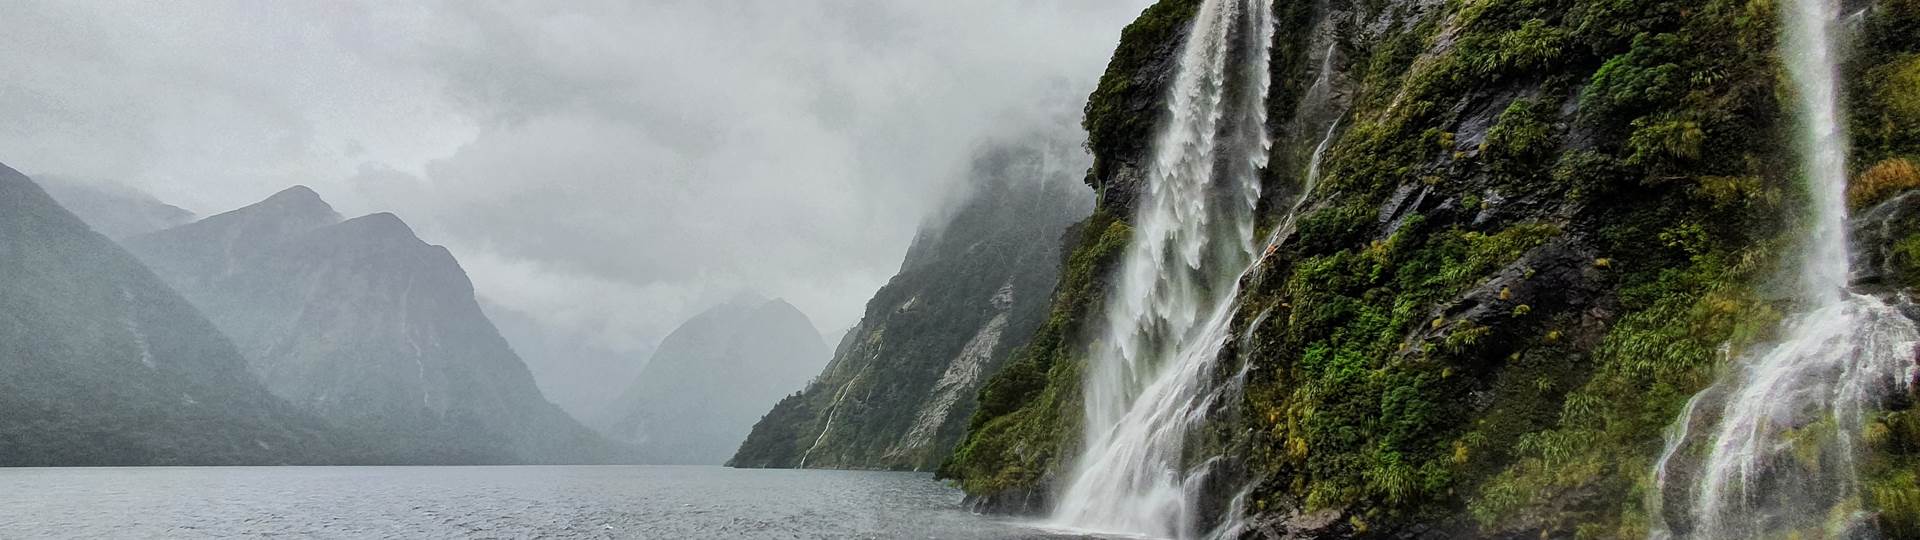 Waterfalls in a moody Doubtful Sound